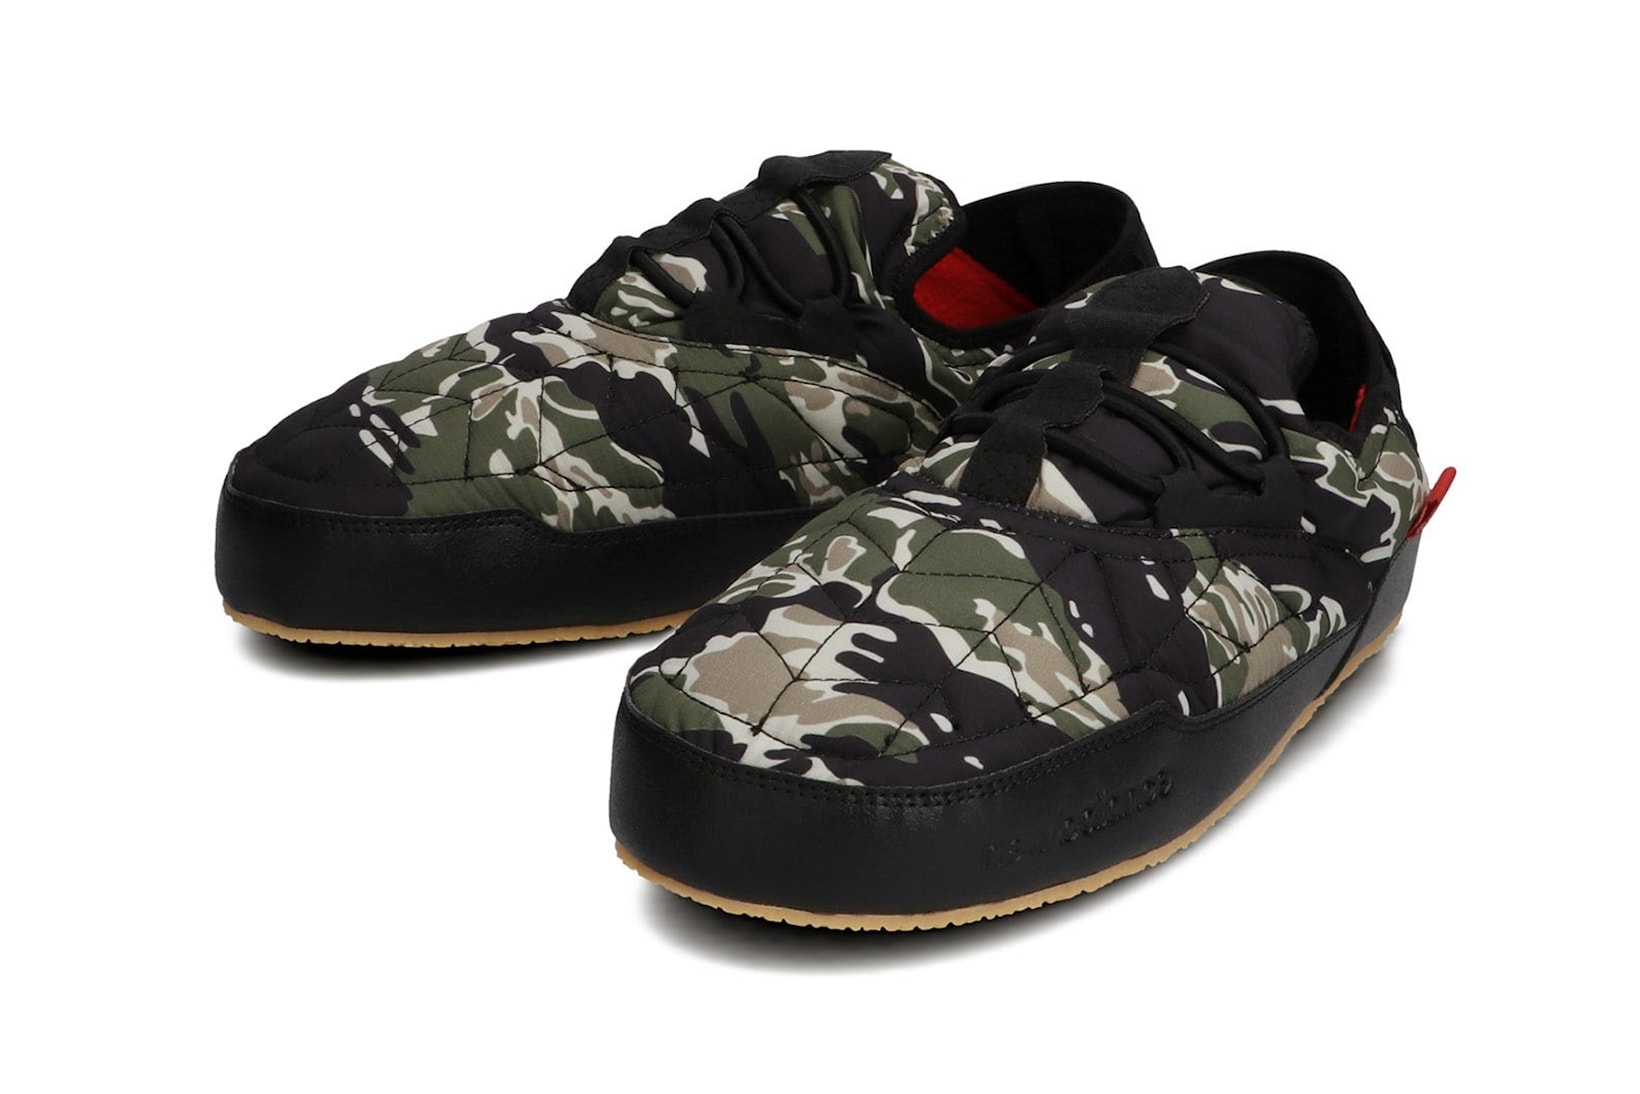 New Balance Caravan Moc Low Slip-Ons Slippers Camo Black Footwear Shoes